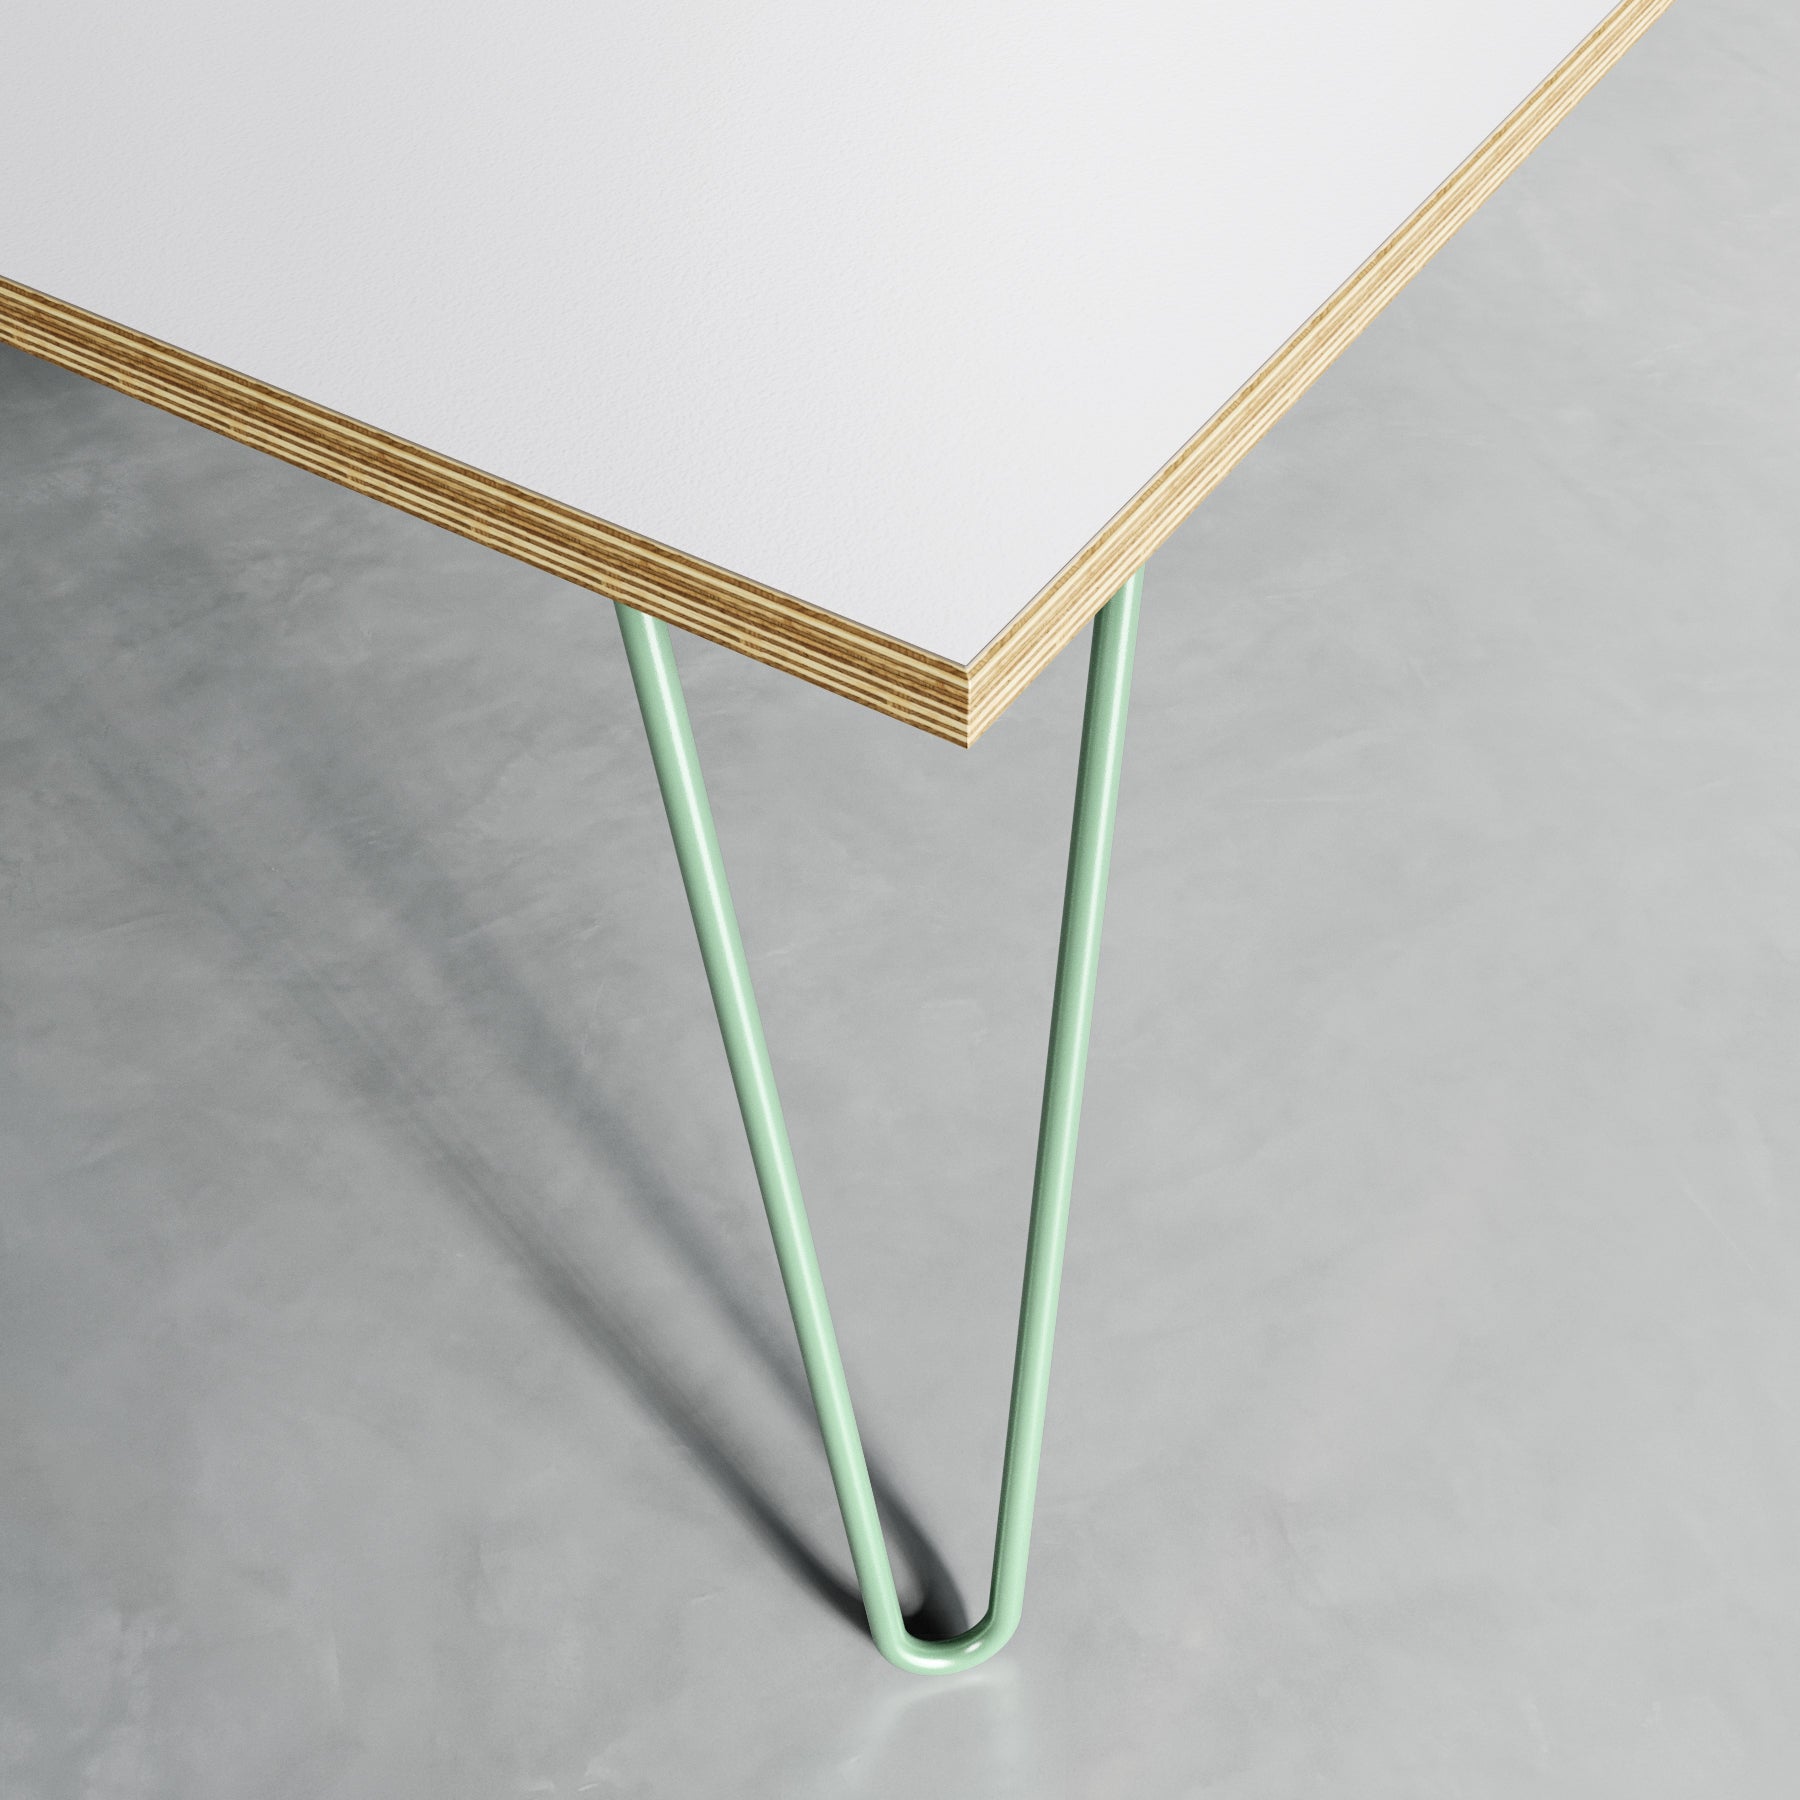 35cm Hairpin Legs - Coffee Table